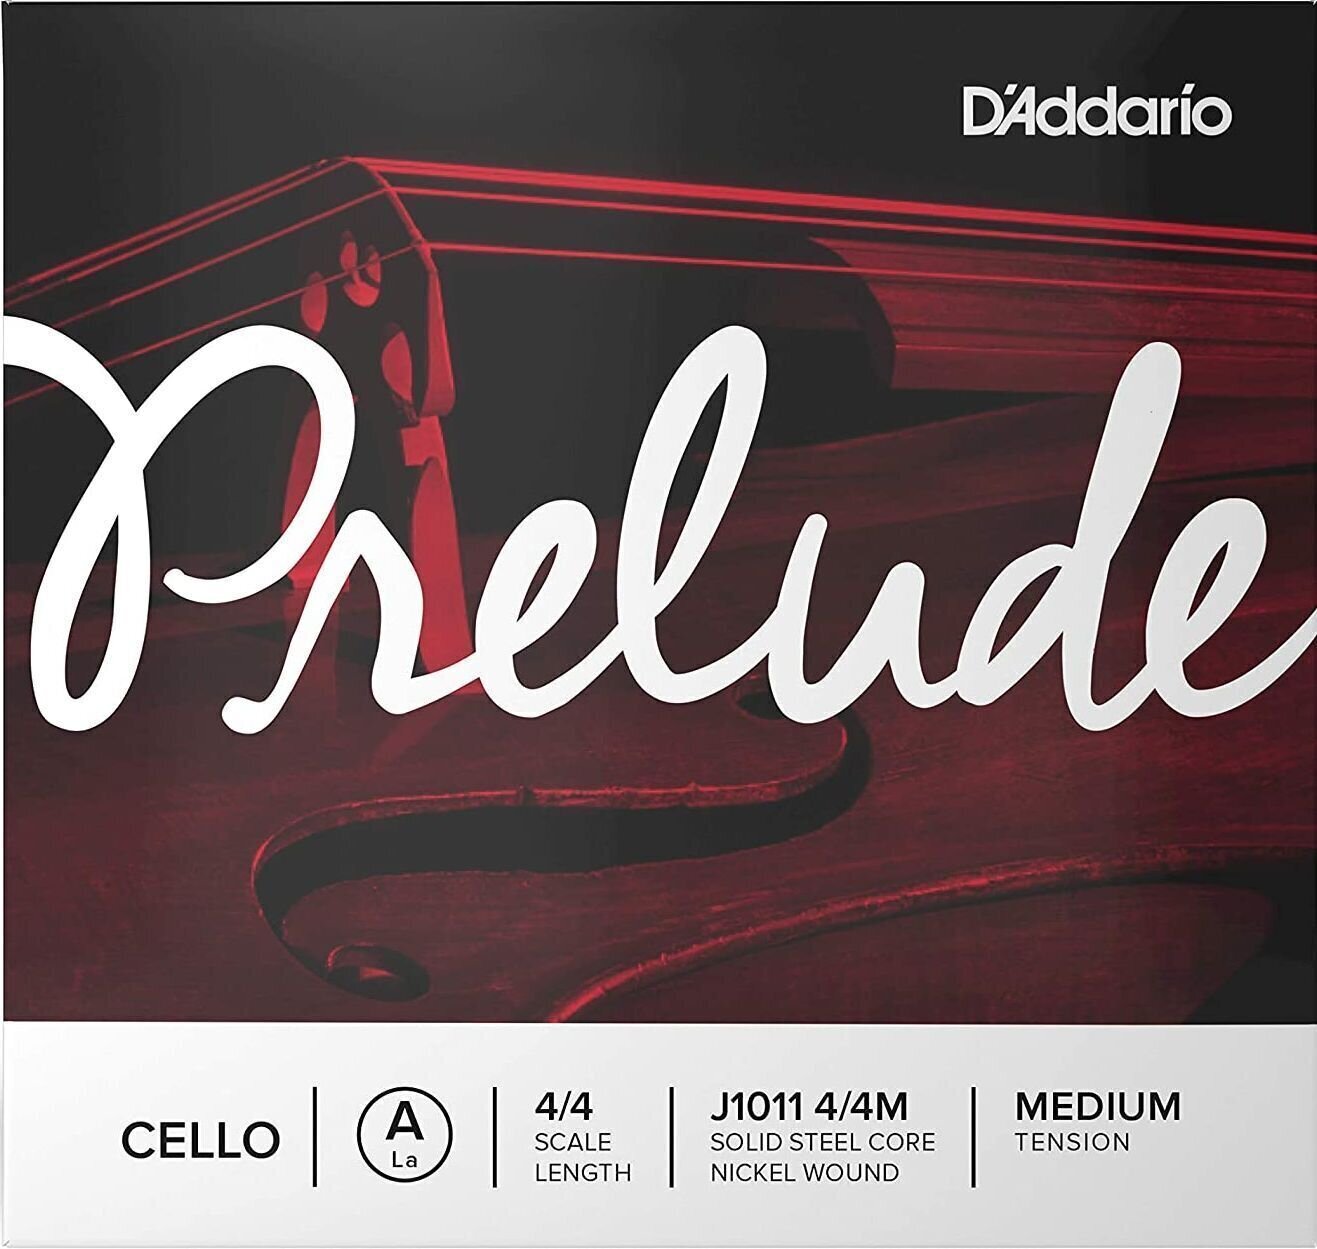 Struny pro violončelo D'Addario J1011 4/4M Prelude Struny pro violončelo